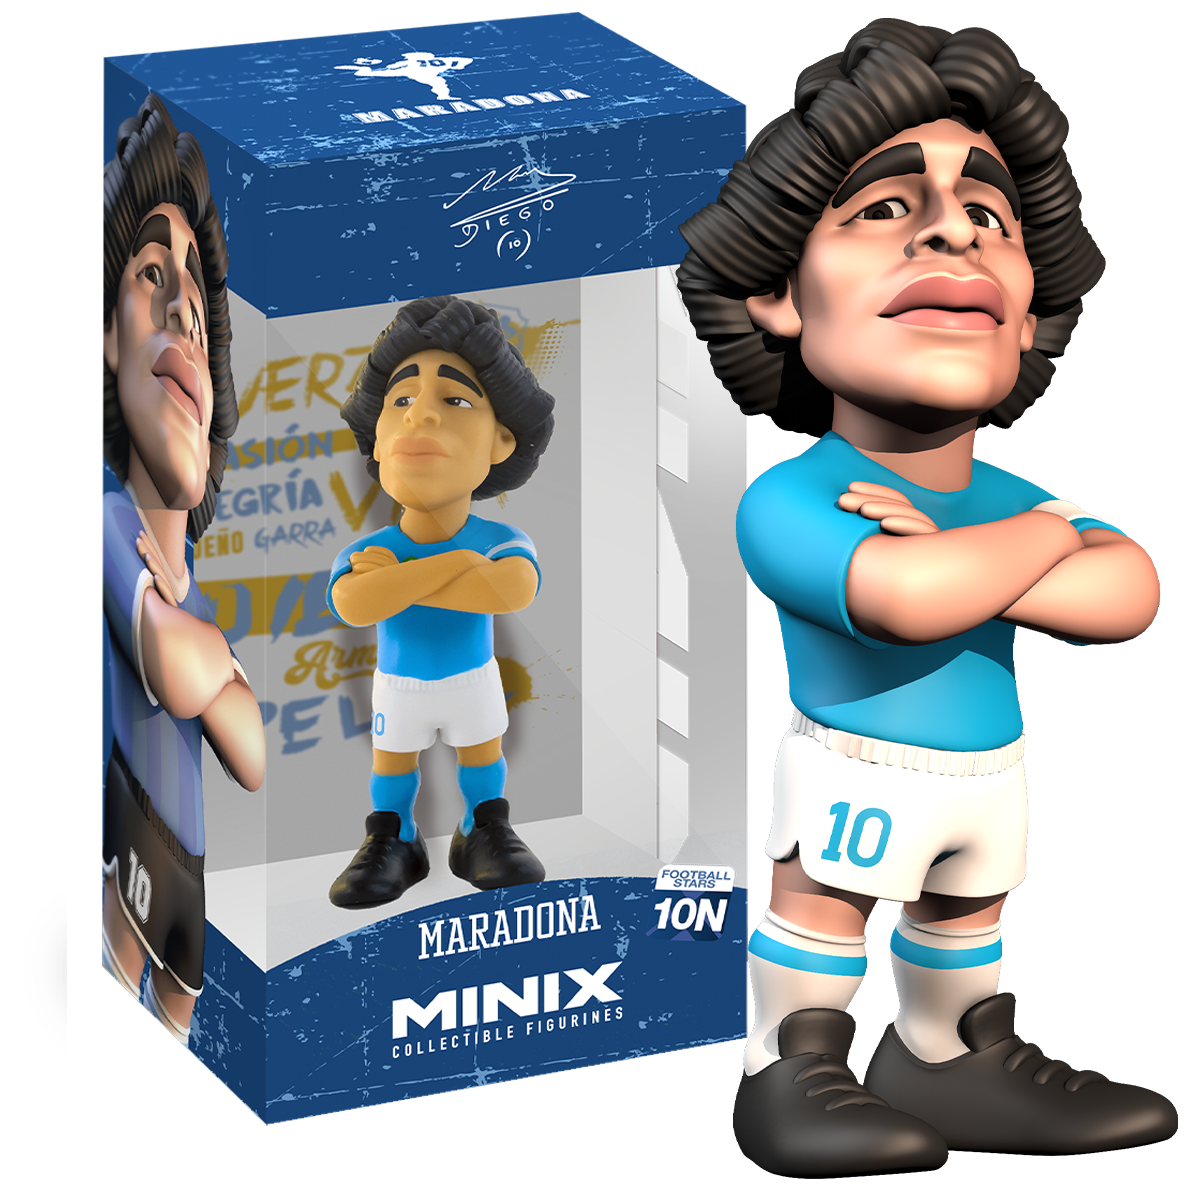 Minix collectible figurines - maradona - 